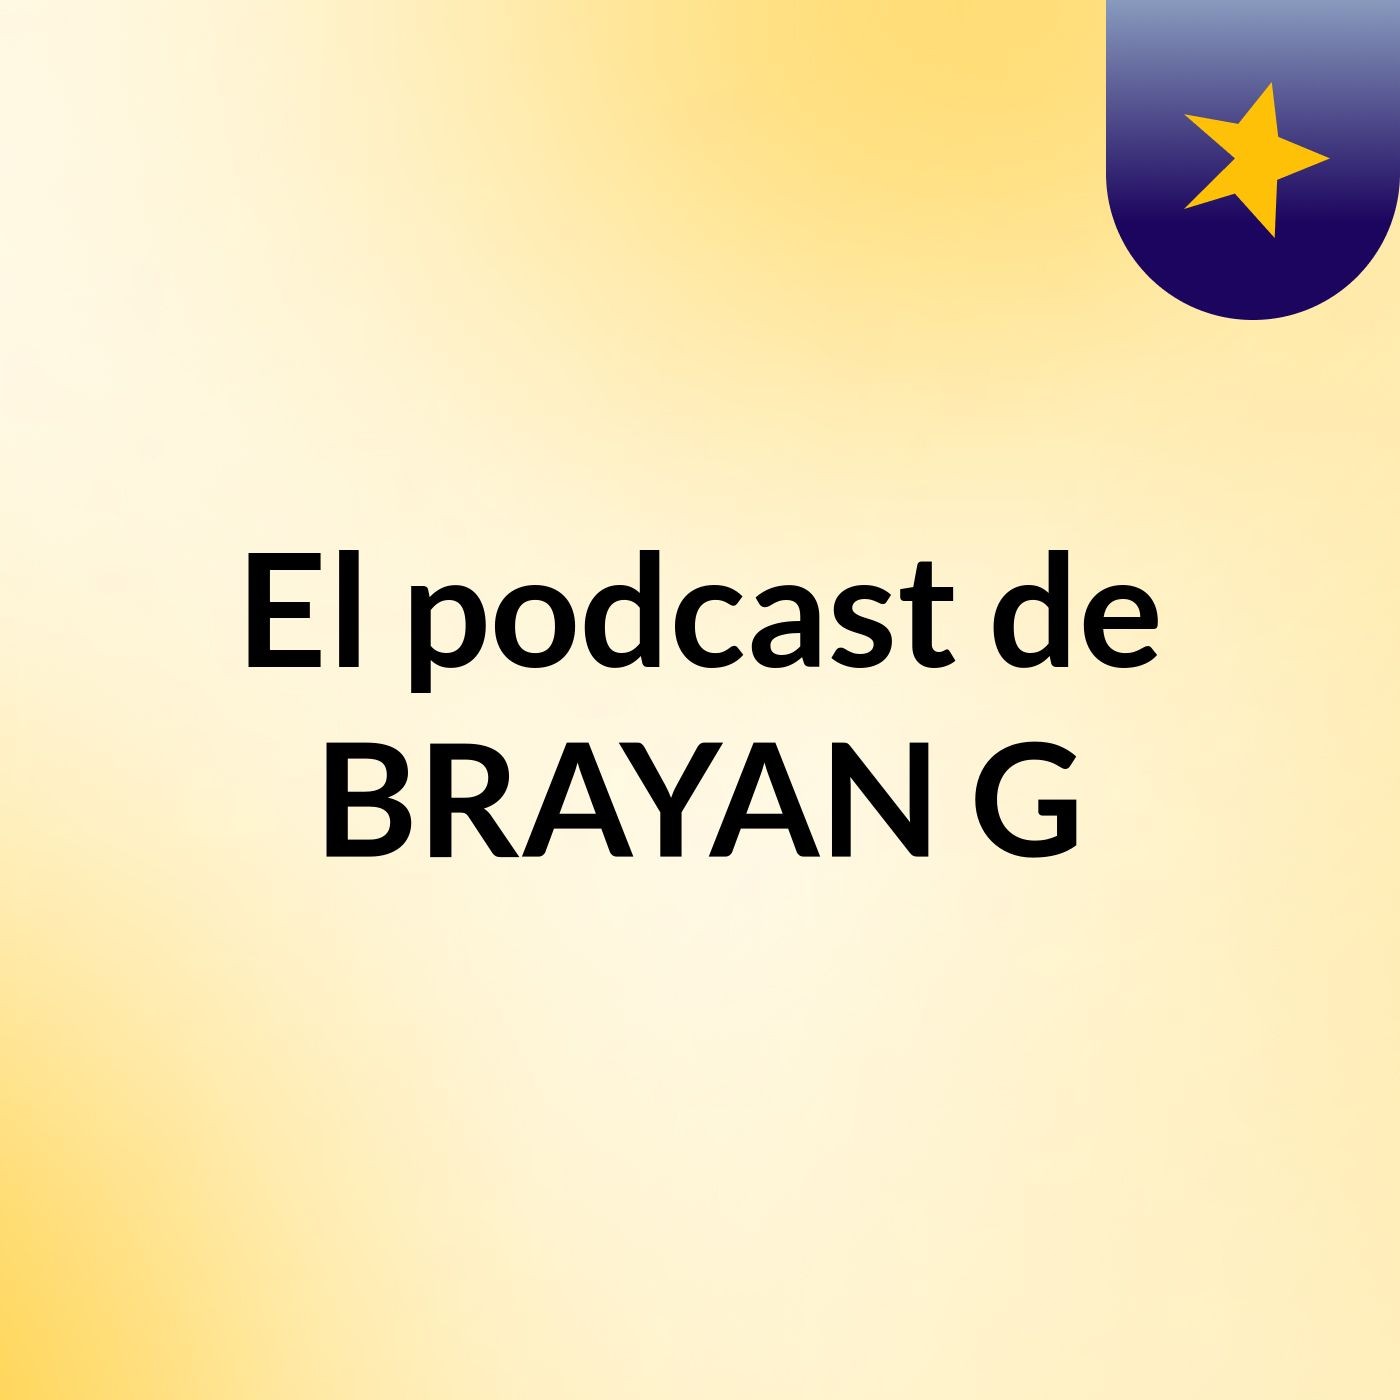 El podcast de BRAYAN G